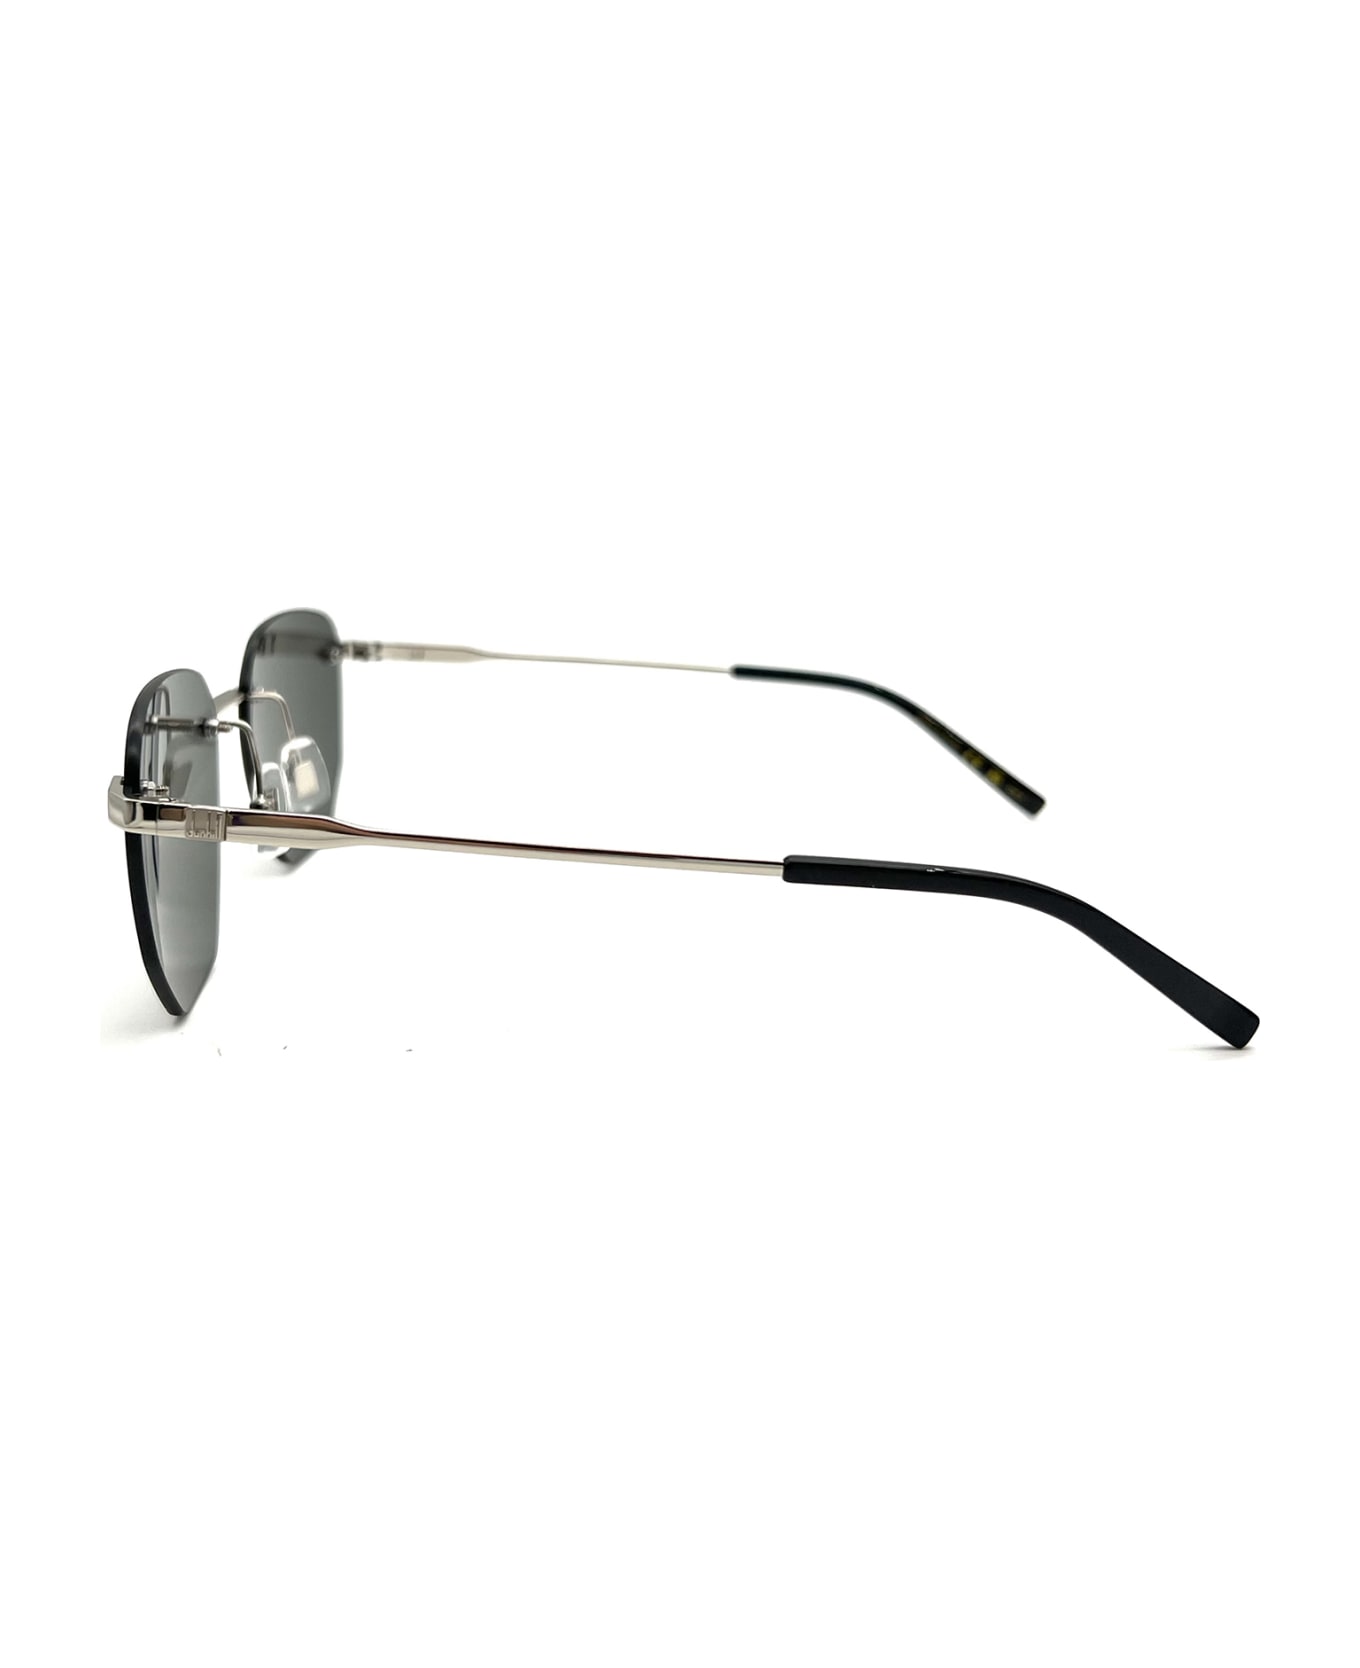 Dunhill DU0066S Sunglasses - Silver Silver Grey サングラス